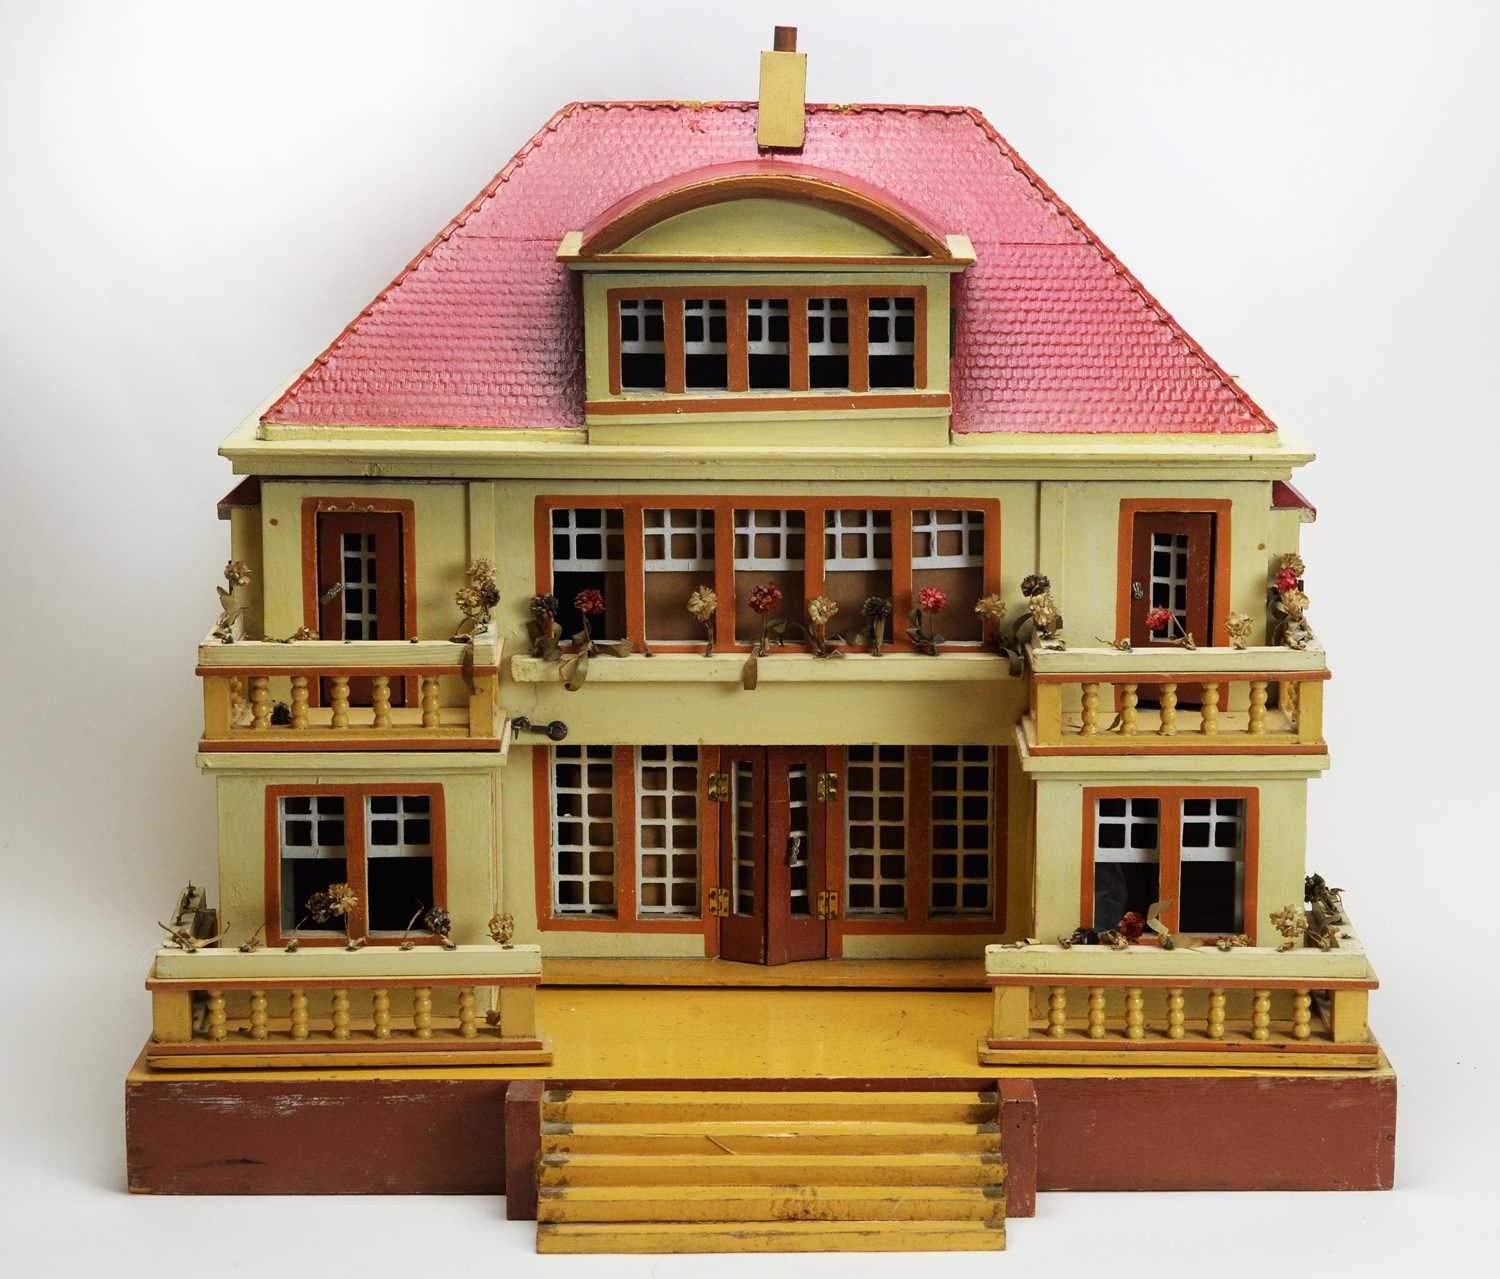 Lot 904 - Moritz Gottstchalk, Marienberg, Germany: Model No. 6337 Red Roof doll's house